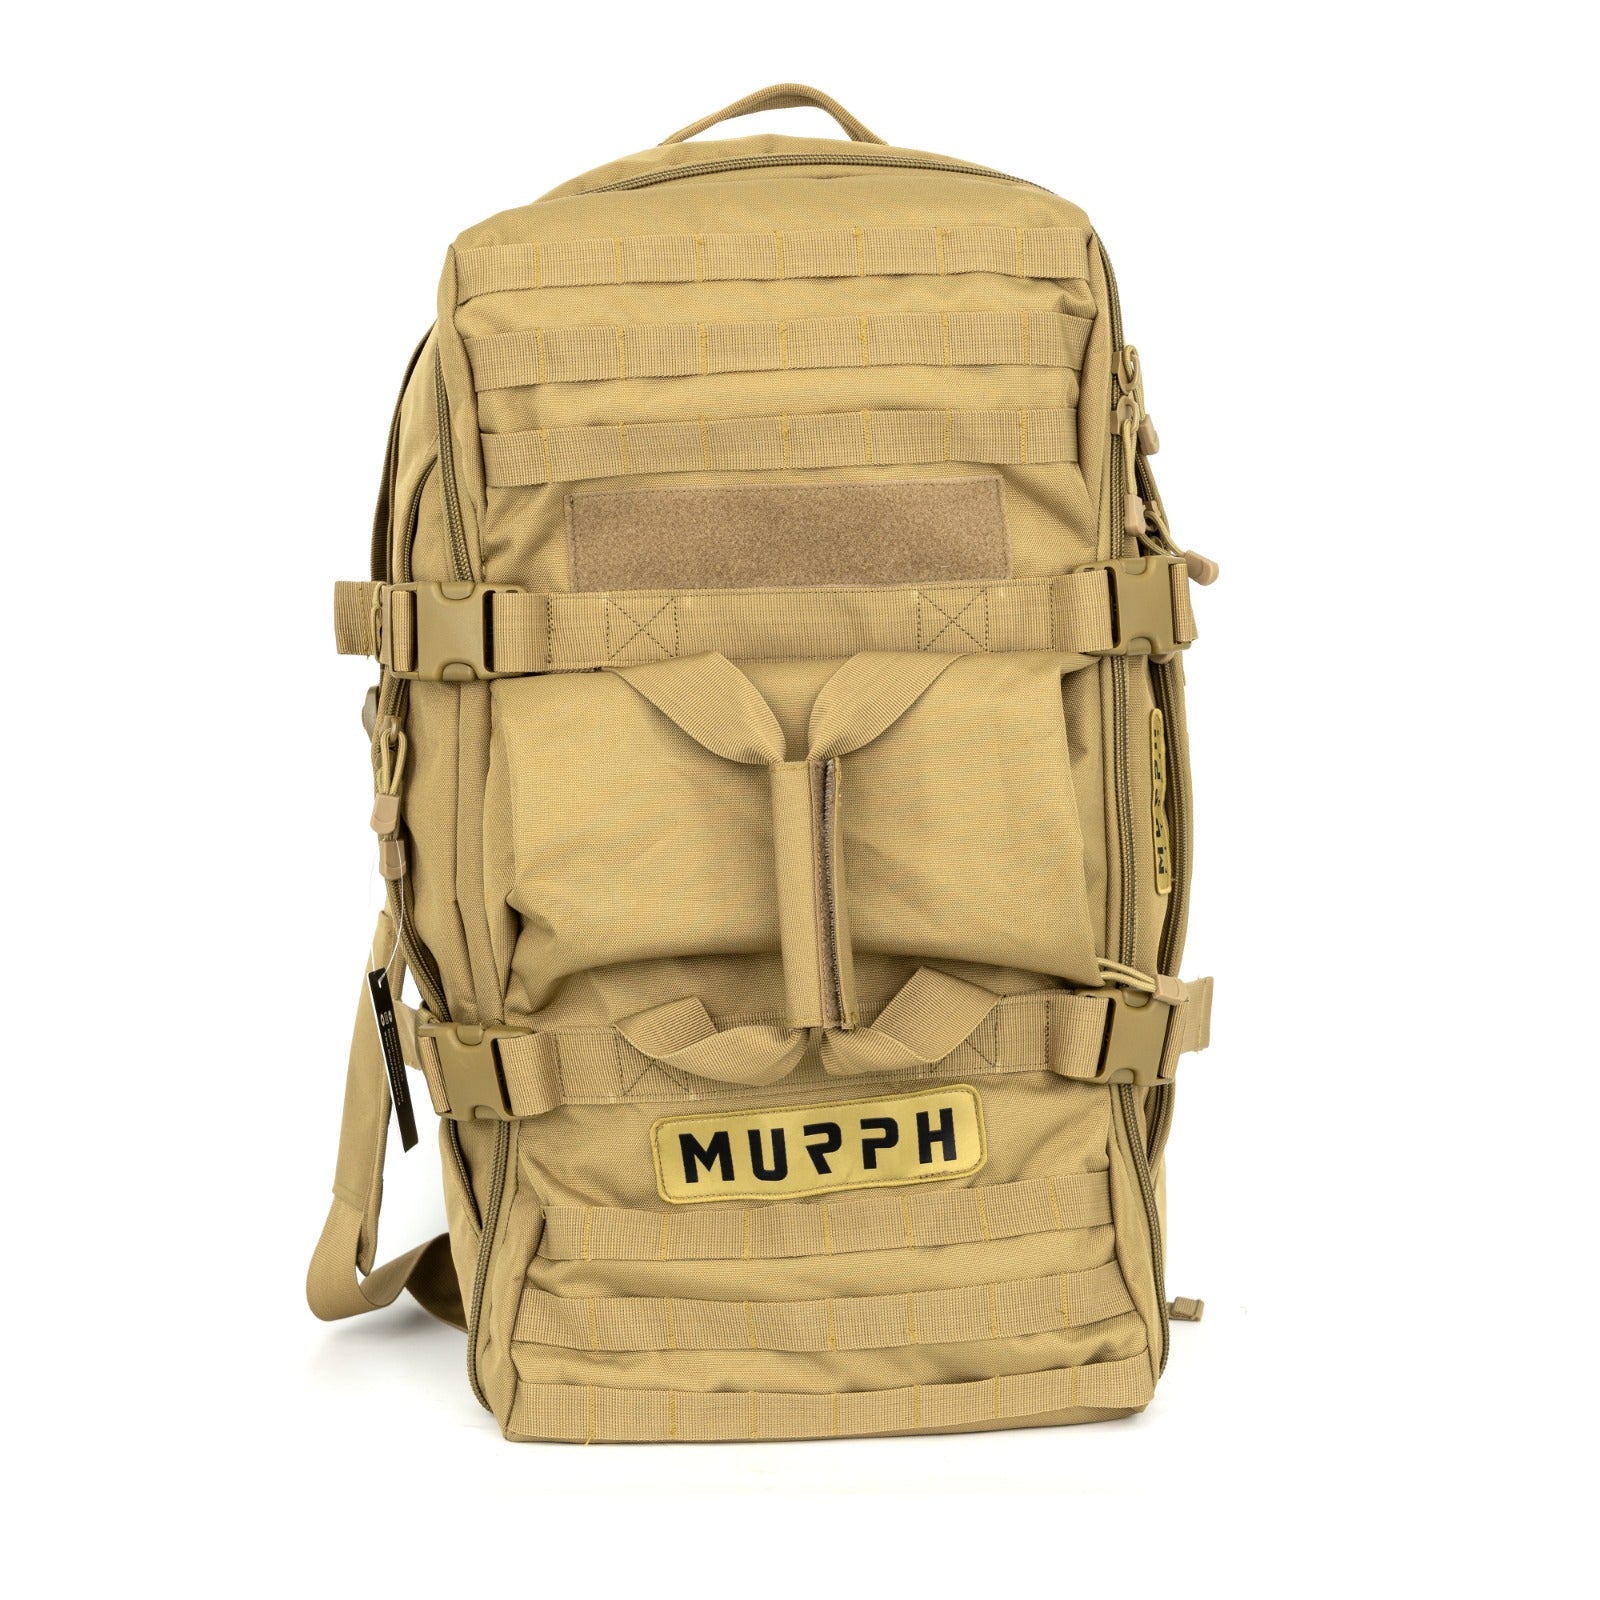 Training bag FlexCore MURPH - Tan